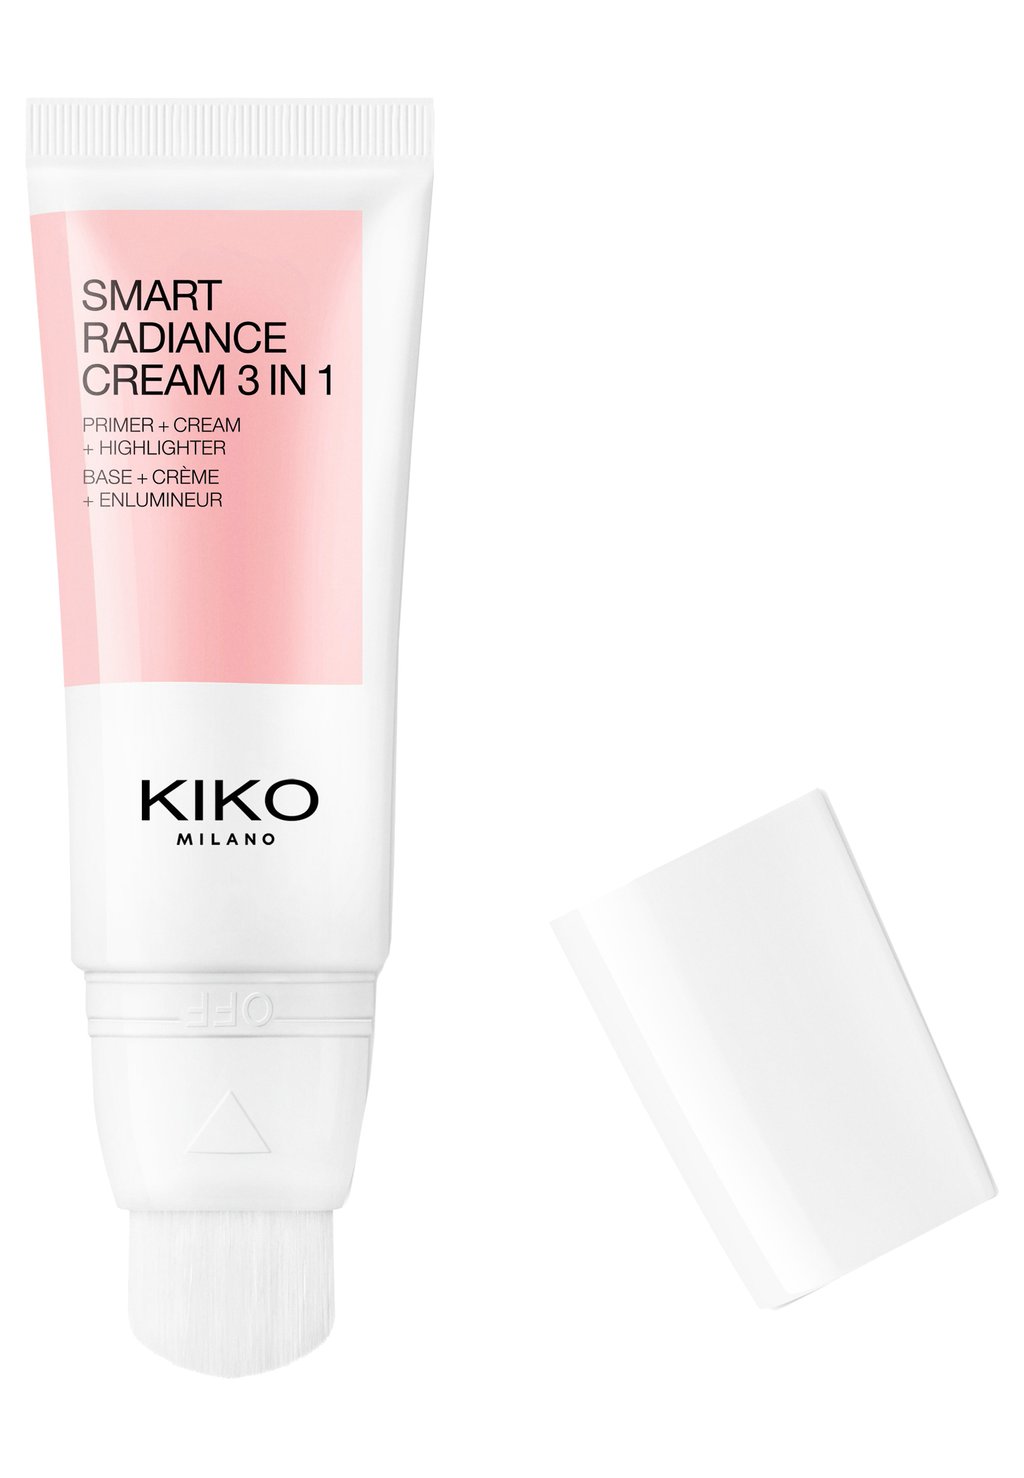 Праймер Smart Radiance Cream 3In1 KIKO Milano, цвет 03 glowing rose